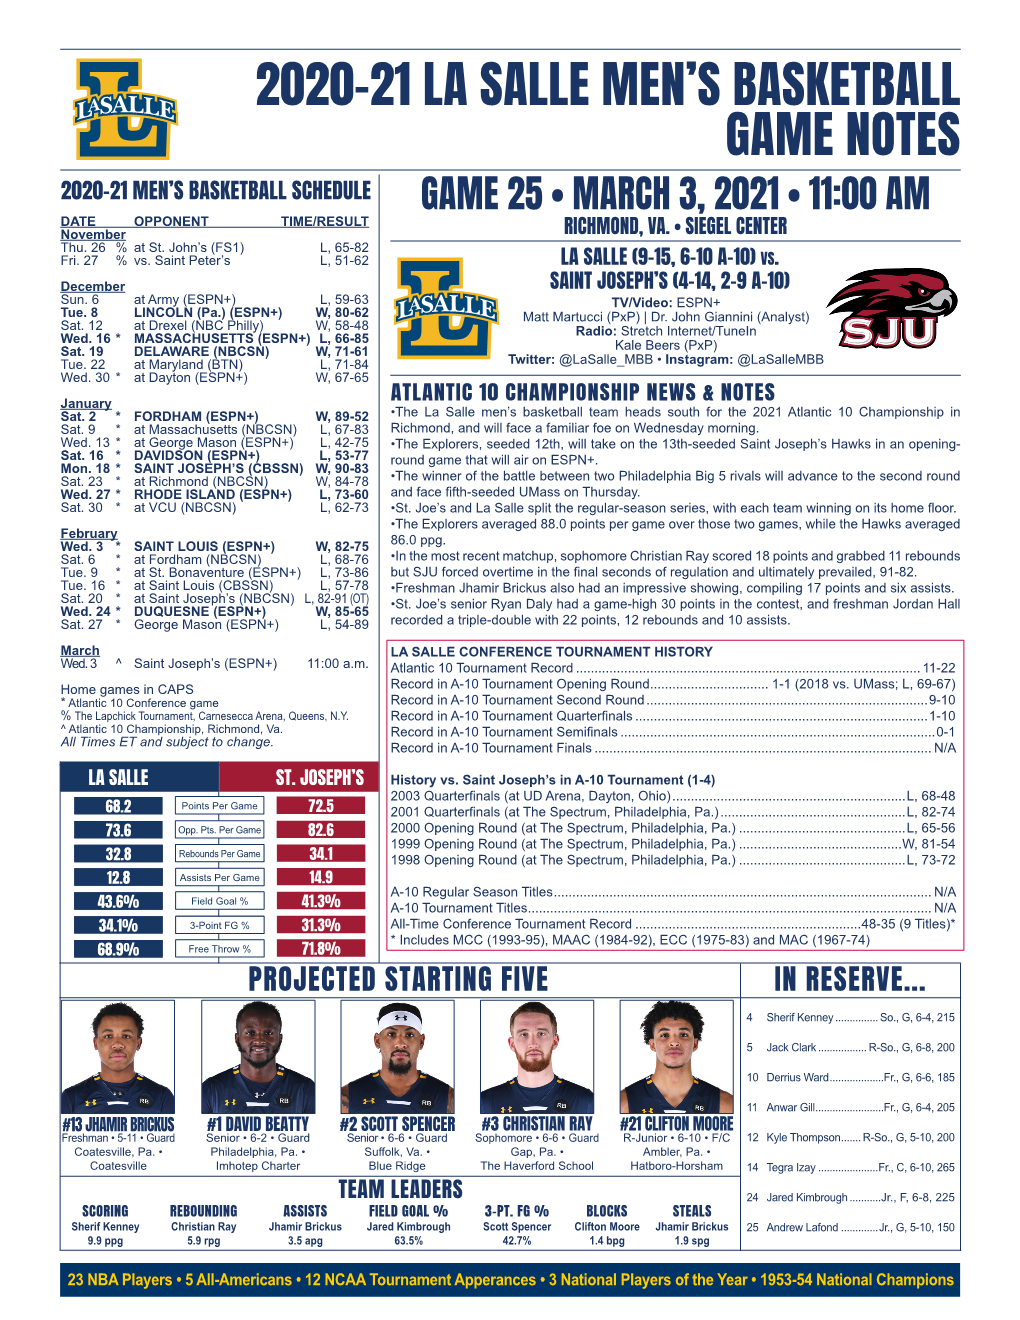 2020-21 La Salle Men's Basketball Game Notes